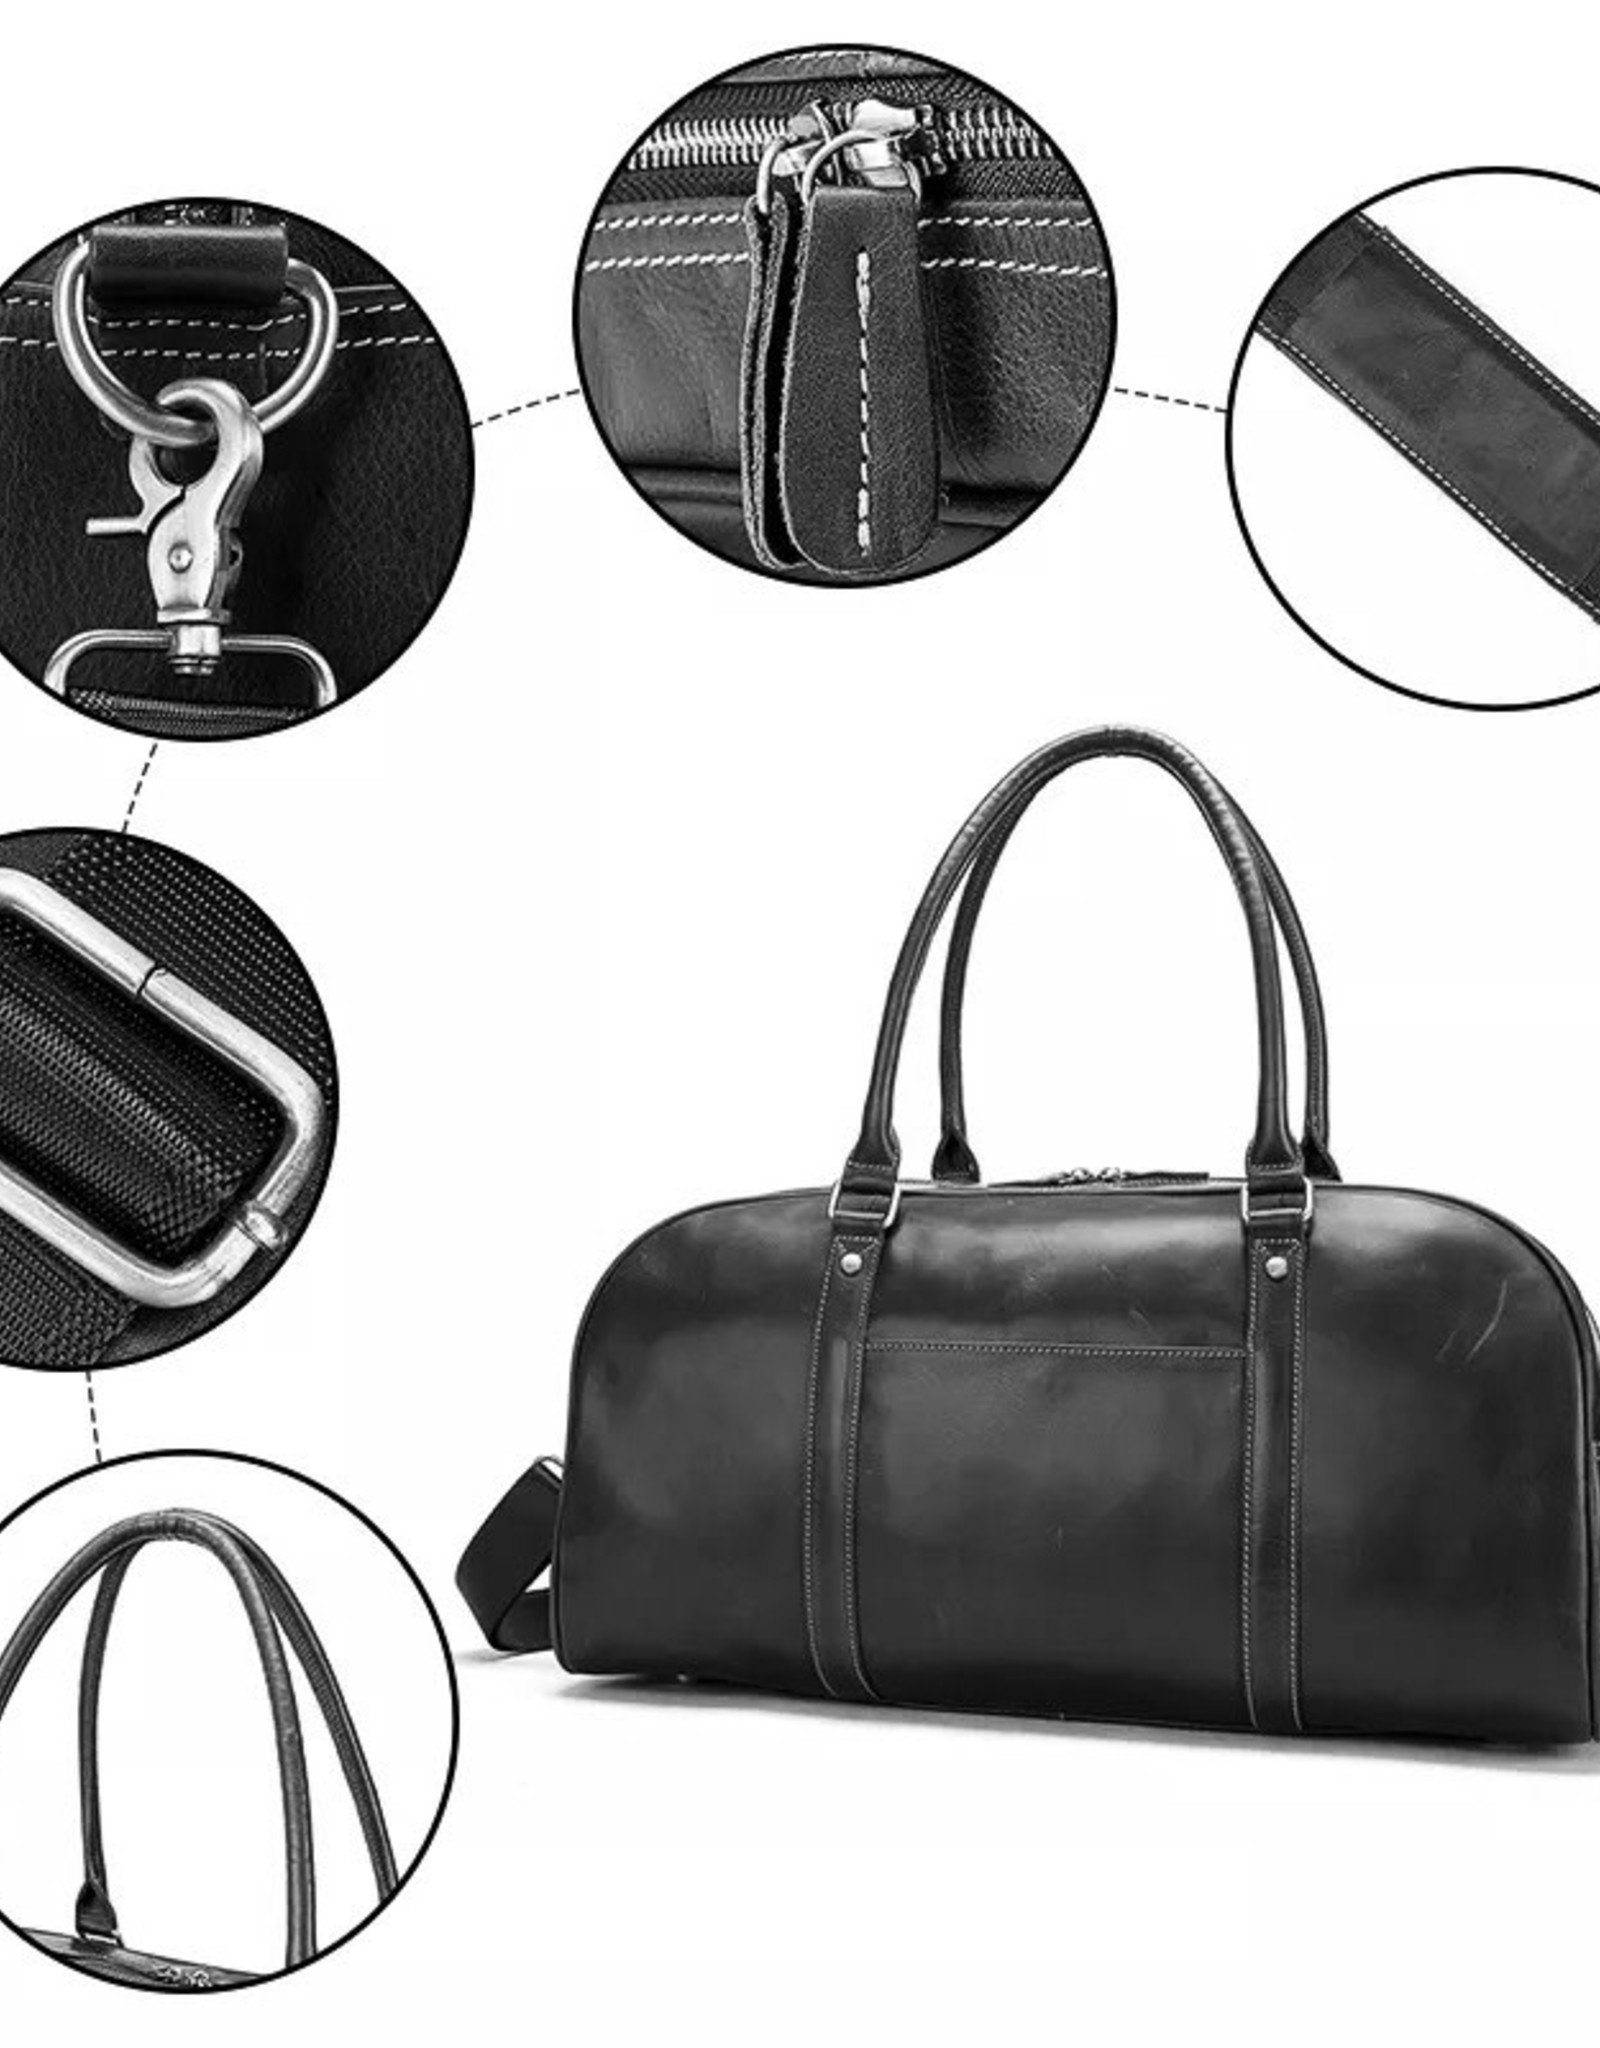 Weston Travel Luggage Bag Genuine Leather